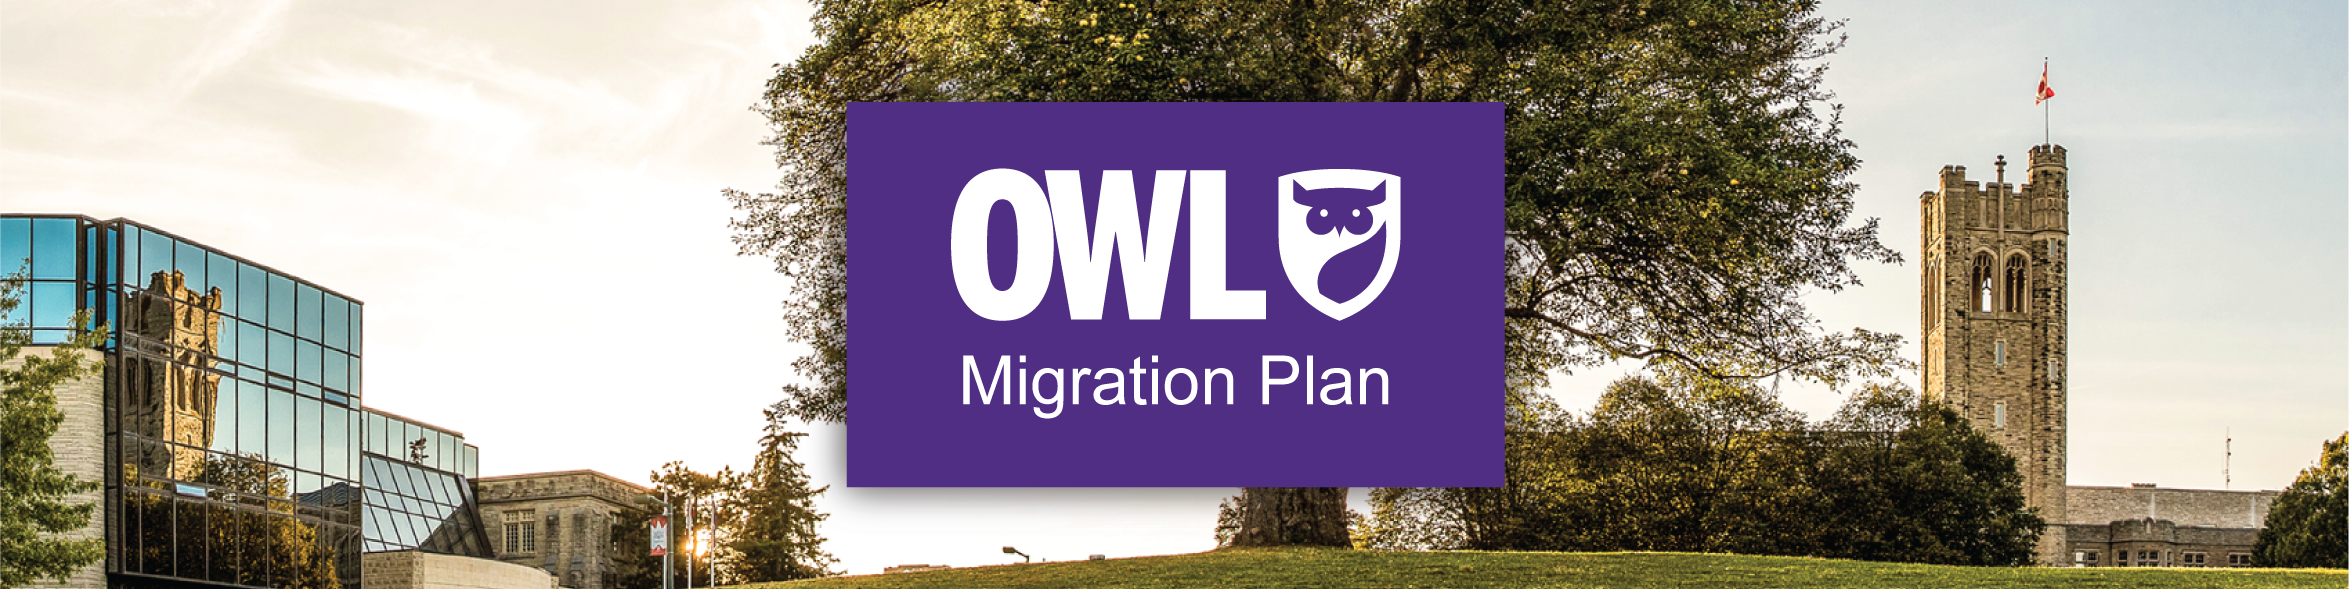 OWL Migration Plan